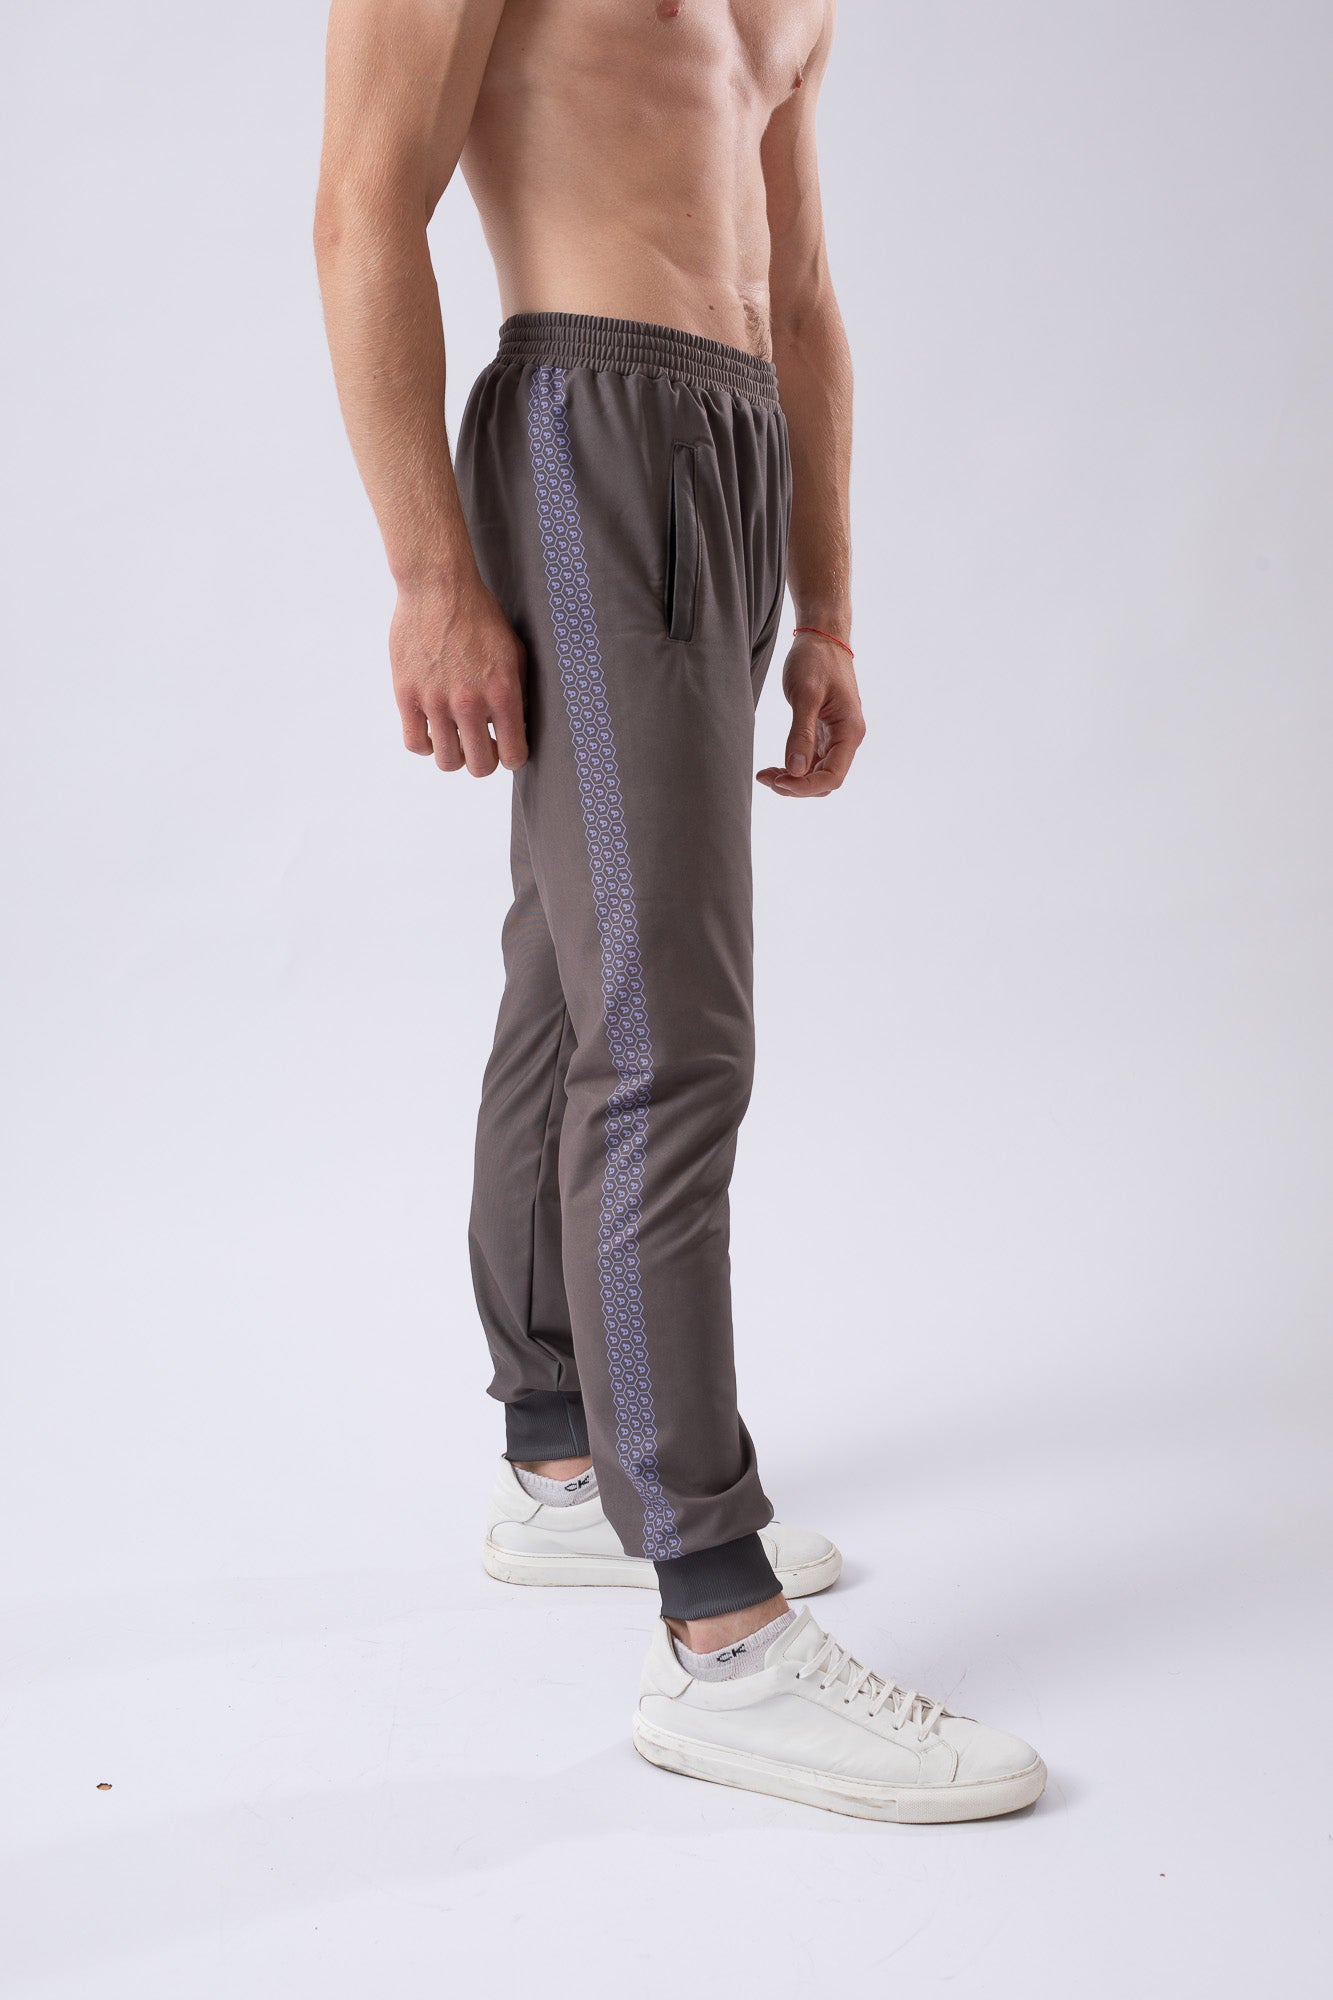 DRYWORLDShop Men's Cored Pro Tracksuit Pants